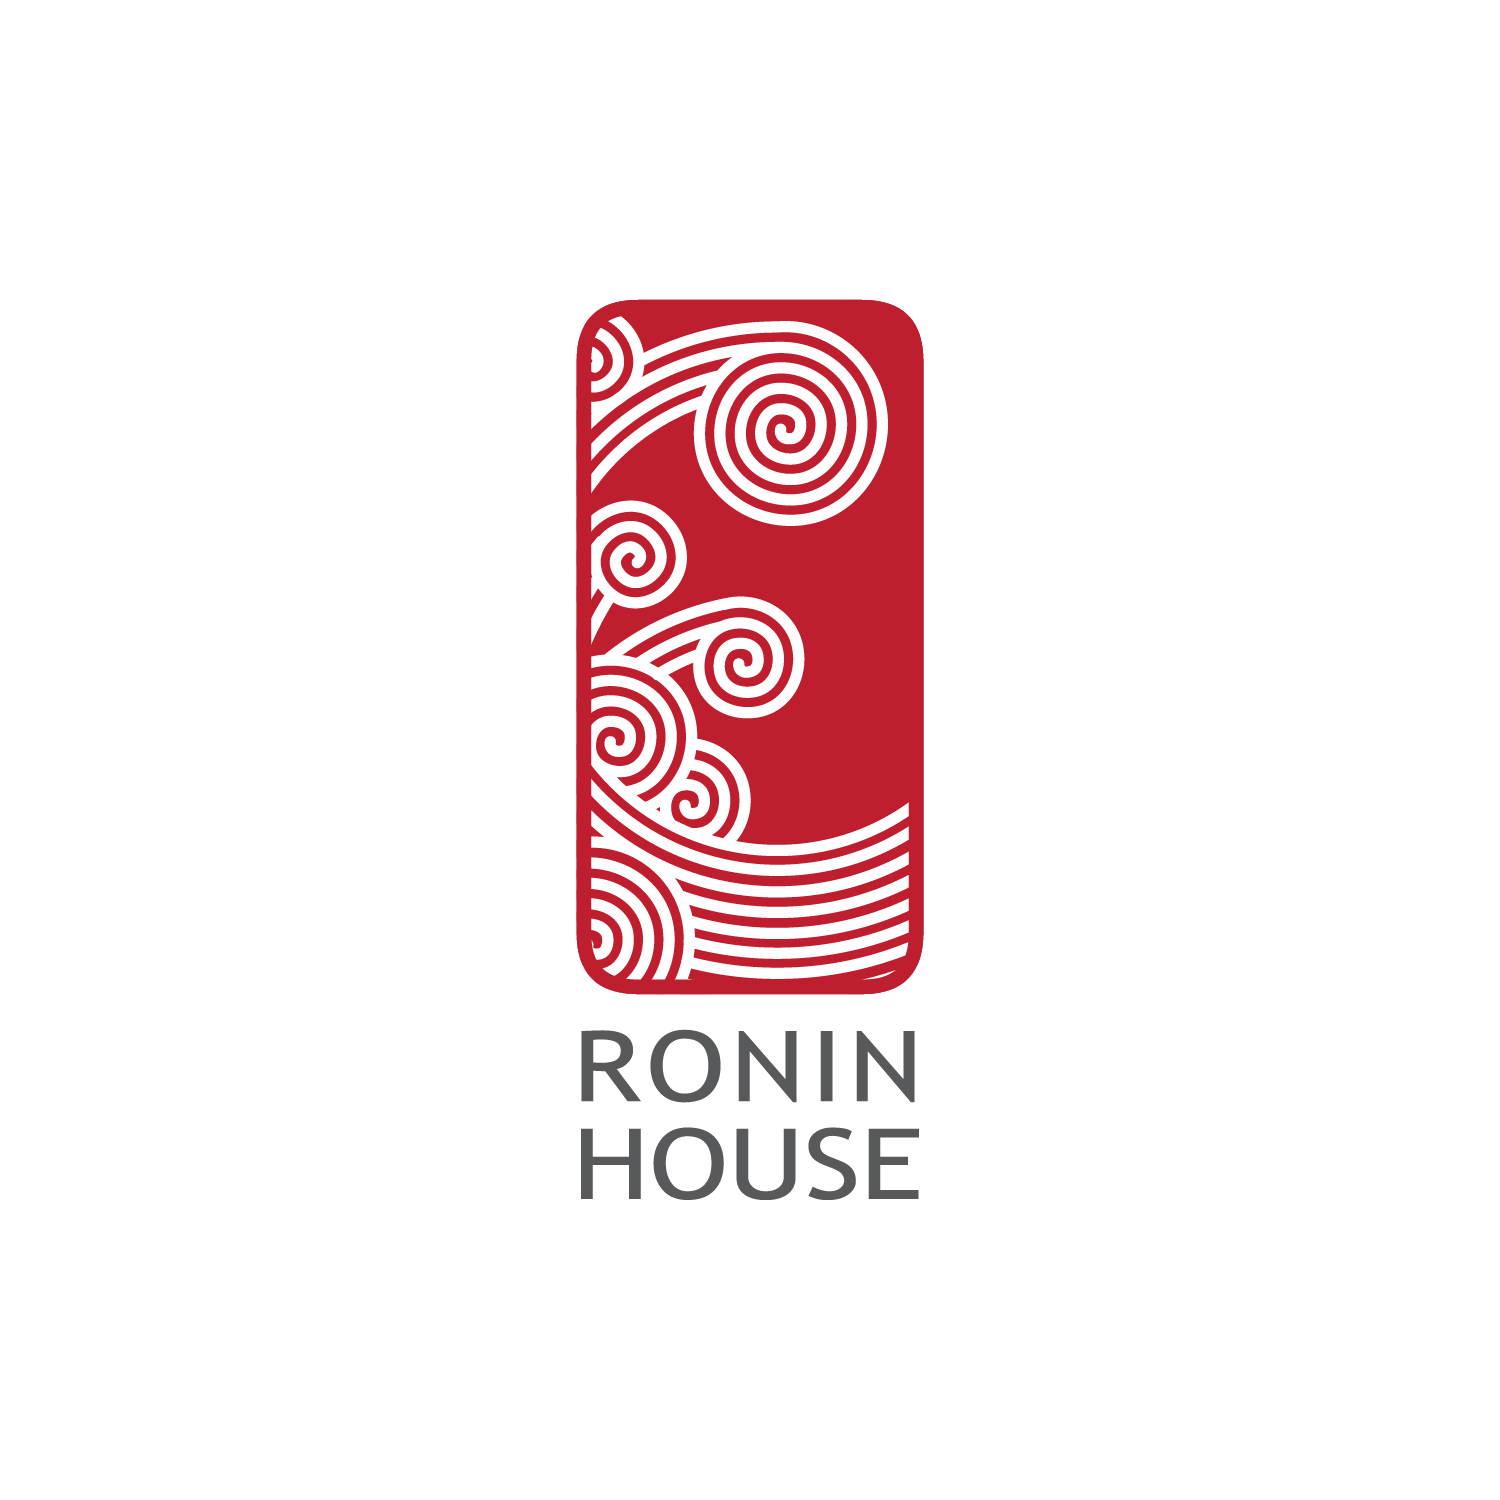 Ronin House